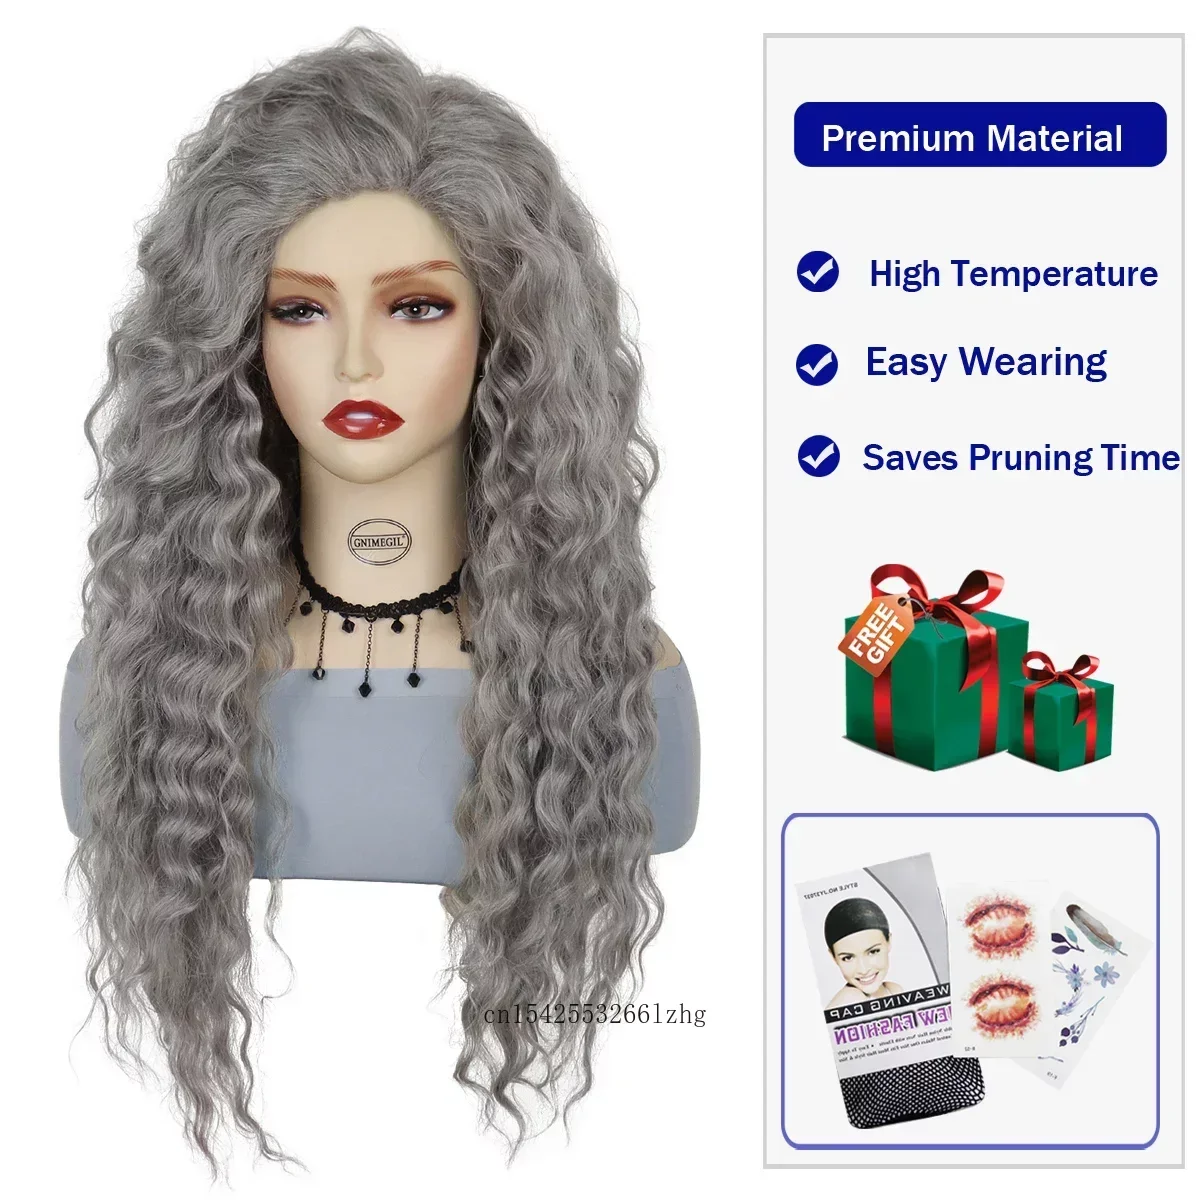 GNIMEGIL-Peluca de cabello sintético gris para mujer, cabellera larga con ondas de agua, Natural, esponjosa, rizada, para Cosplay, fiesta de Halloween, resistente al calor